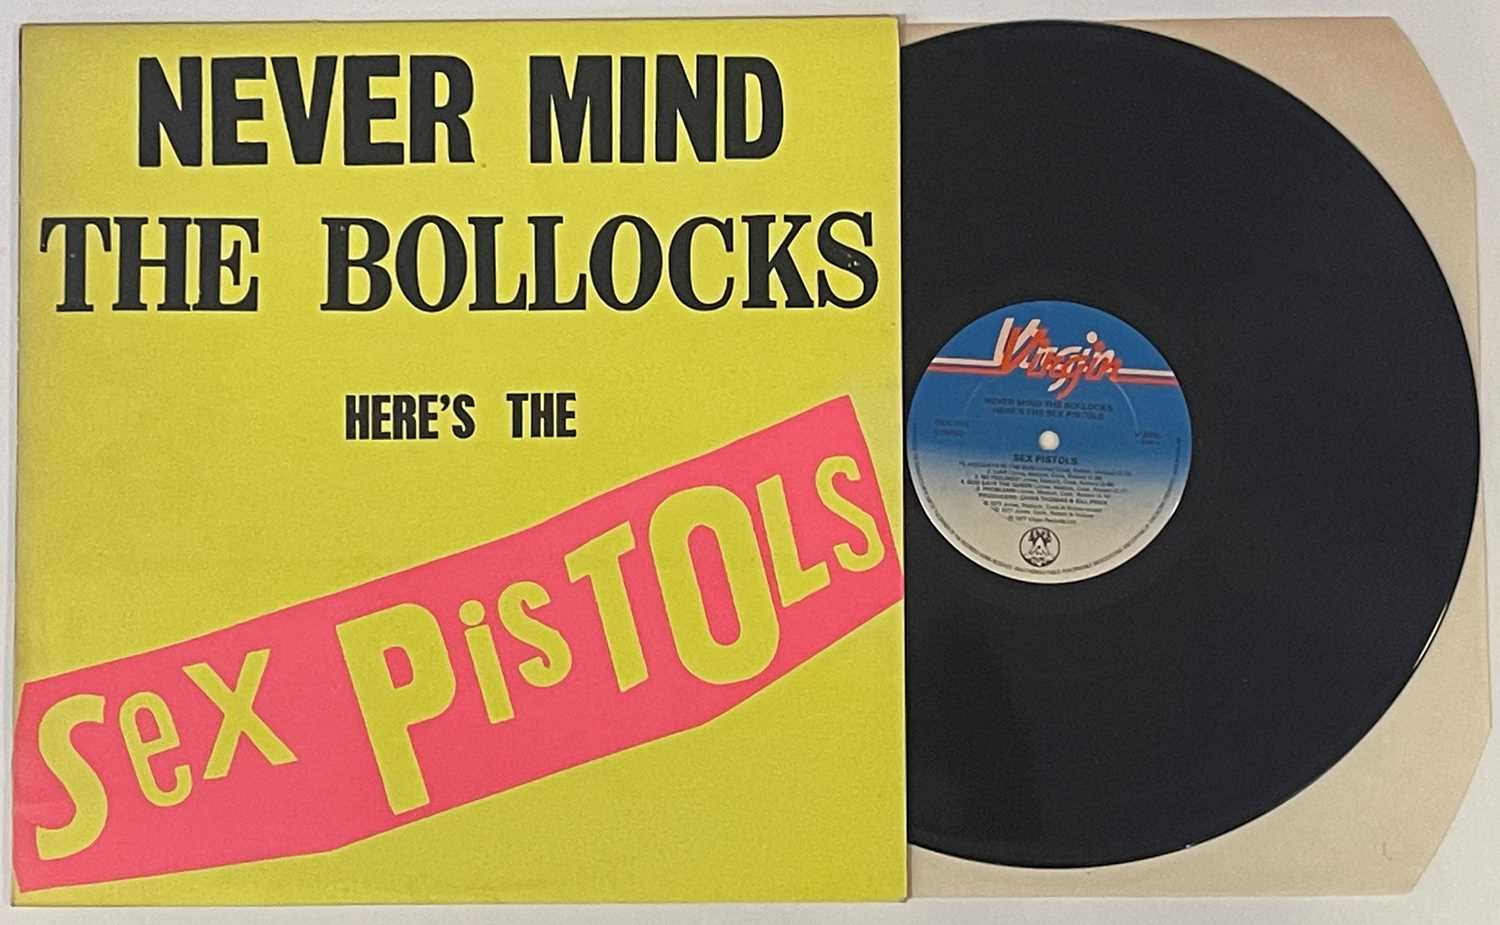 SEX PISTOLS - NEVER MIND THE BOLLOCKS LP (UK 'BLANK REVERSE' COPY - VIRGIN V 2086)